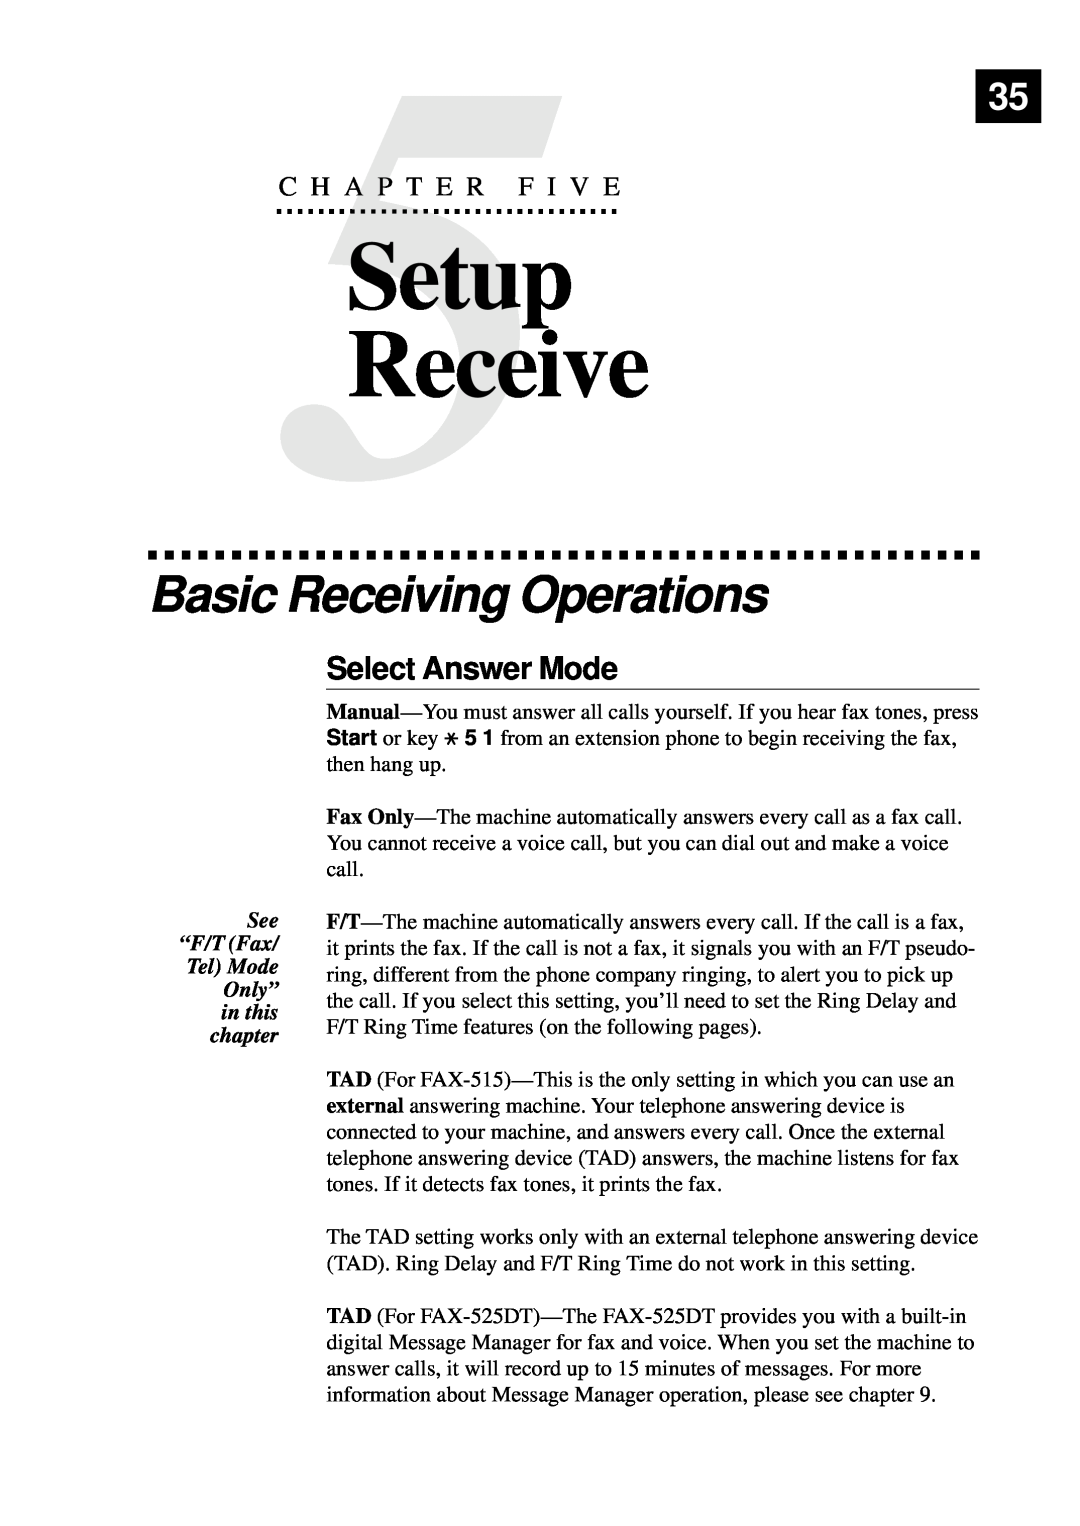 Brother 515 manual Setup, Receive, Basic Receiving Operations, Select Answer Mode, C H A P T E R F I V E 